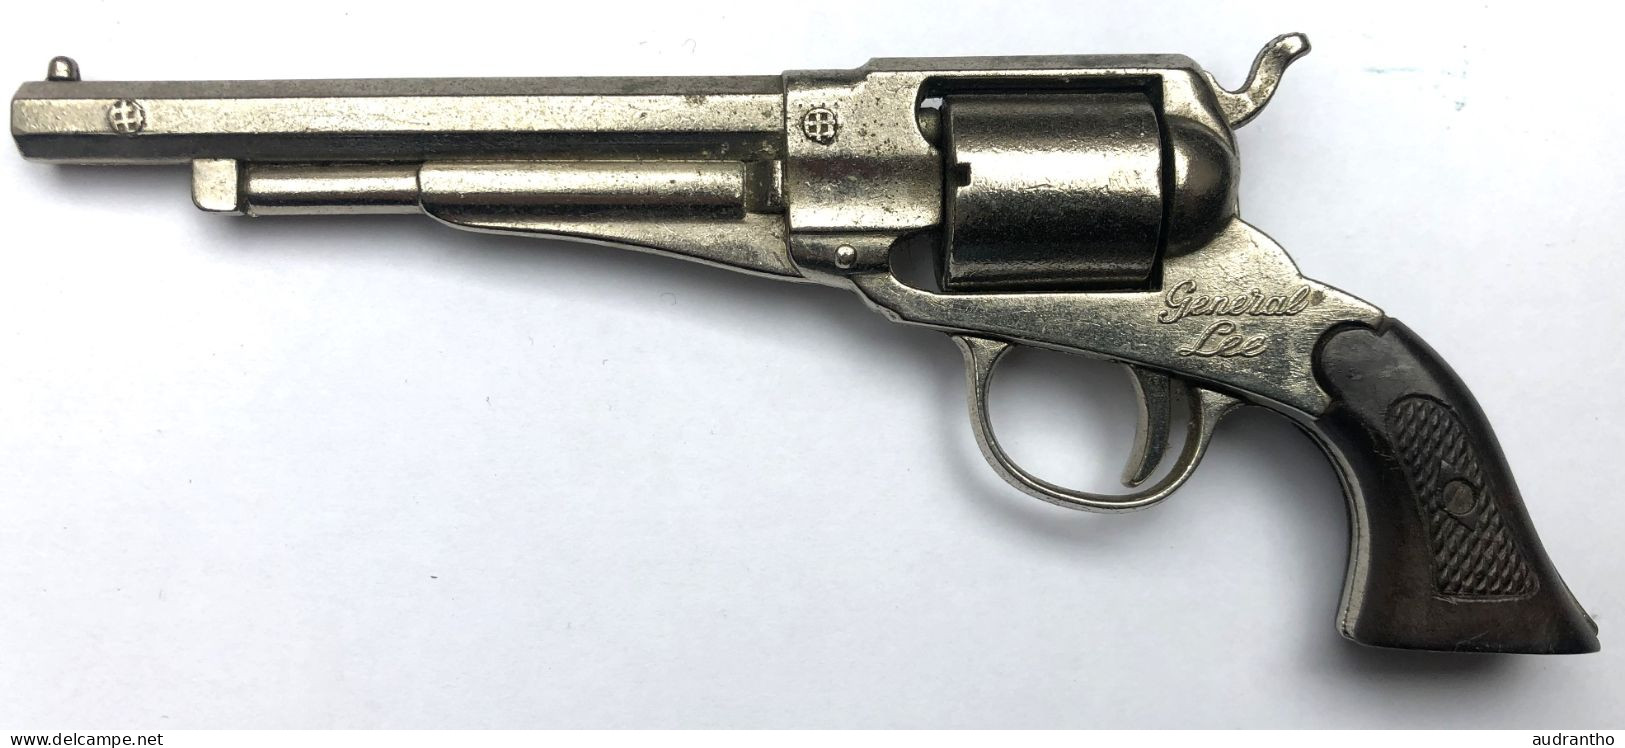 Ancien Jouet Réplique De Pistolet - General Lee - Redendo Spain Espagne - Vintage Toy Gun - Toy Memorabilia